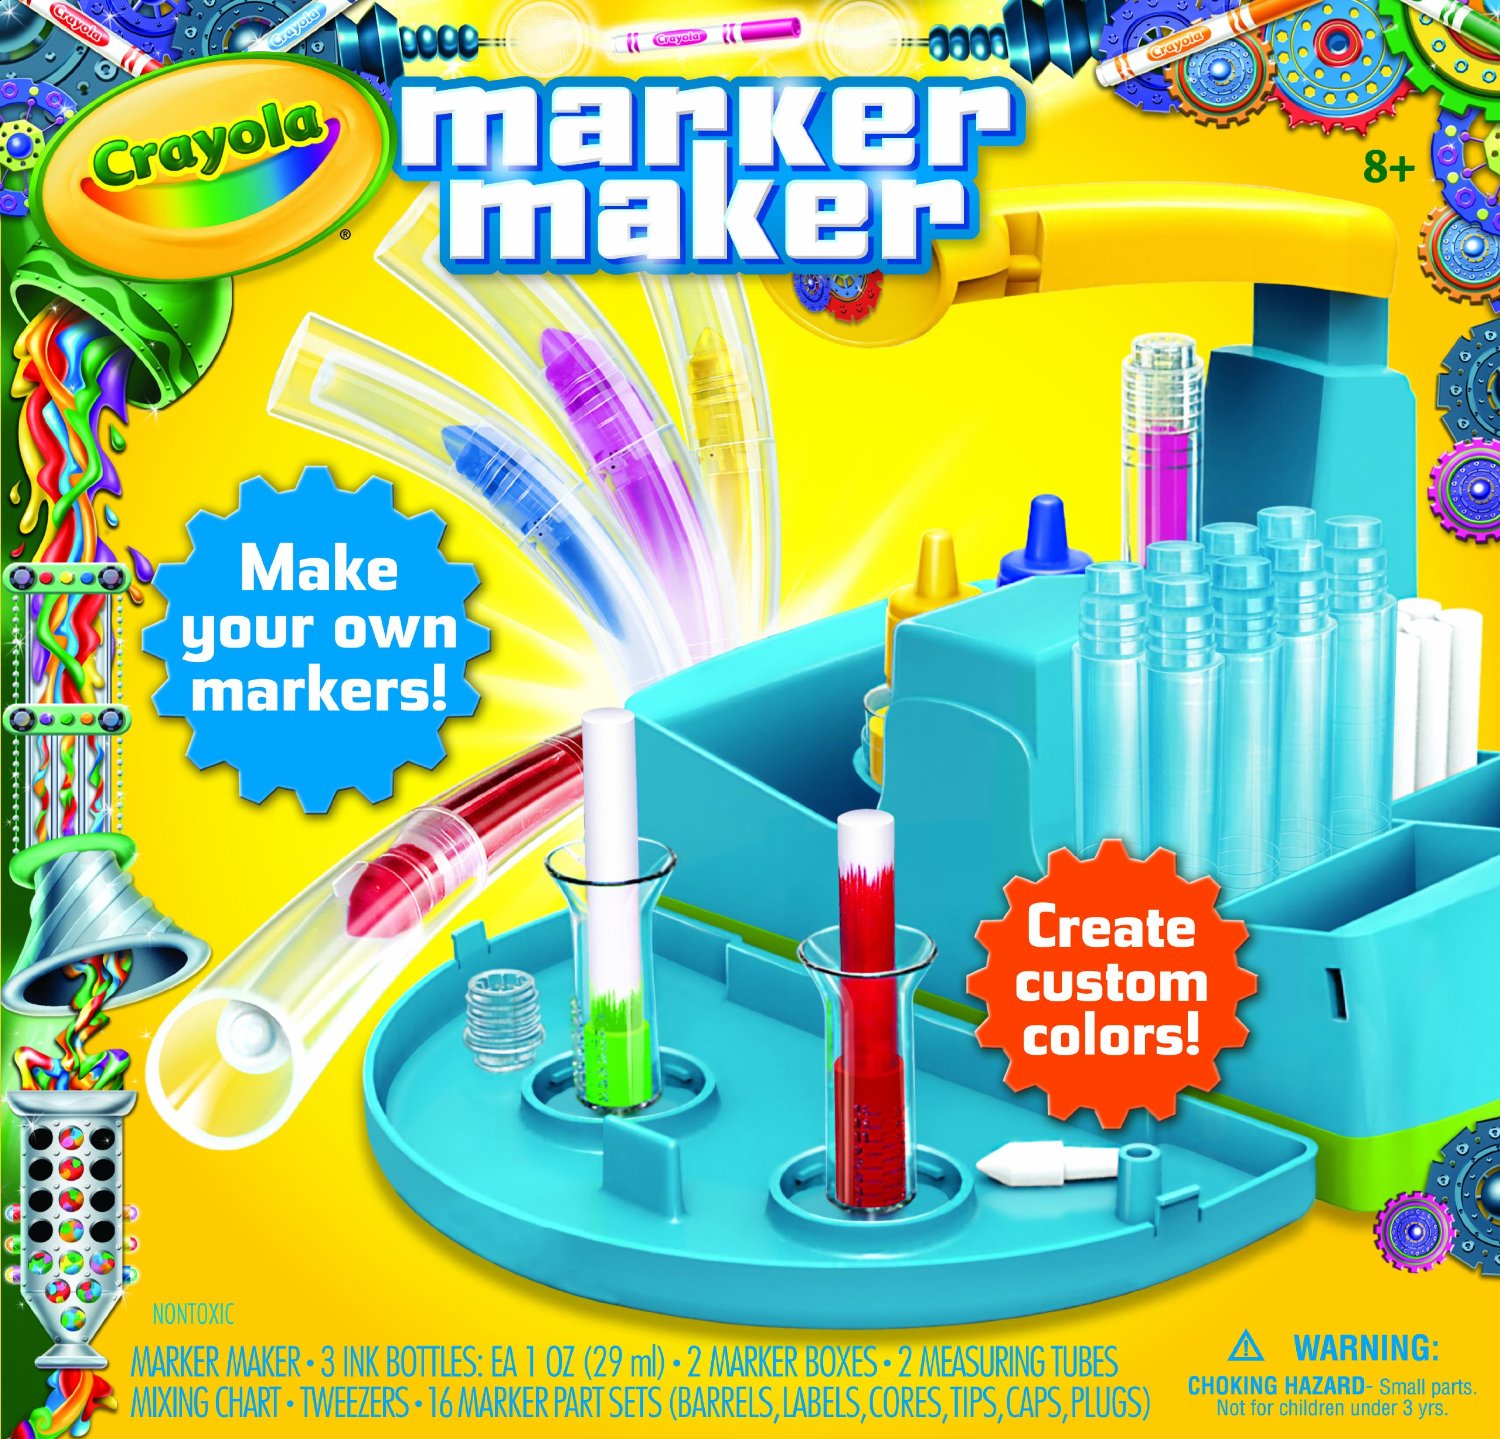 https://www.couponing101.com/wp-content/uploads/2013/11/Crayola-Marker-Maker.jpg